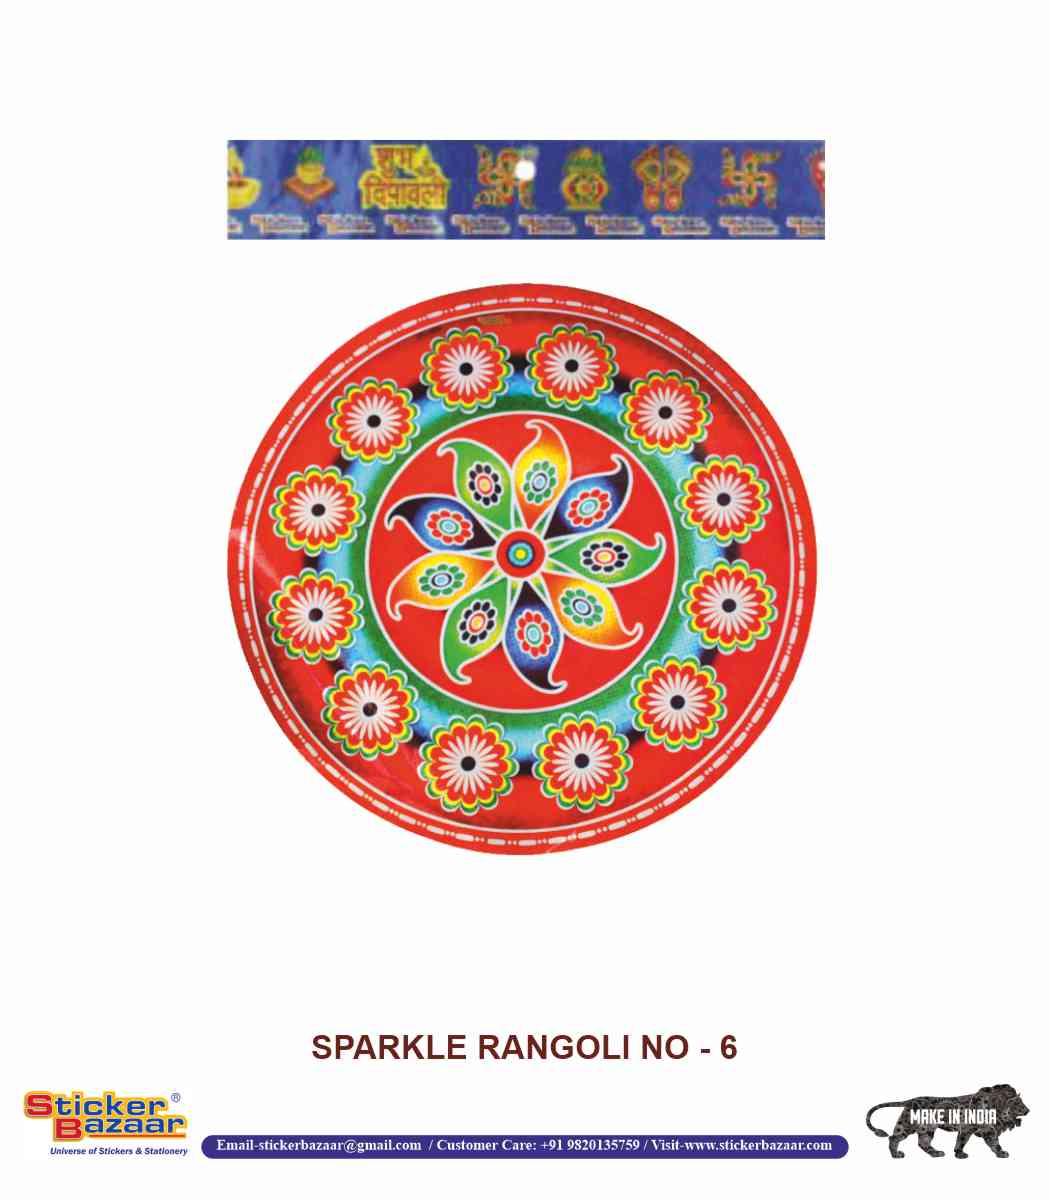 Sticker Bazaar Holo Rangoli SR6 with Header